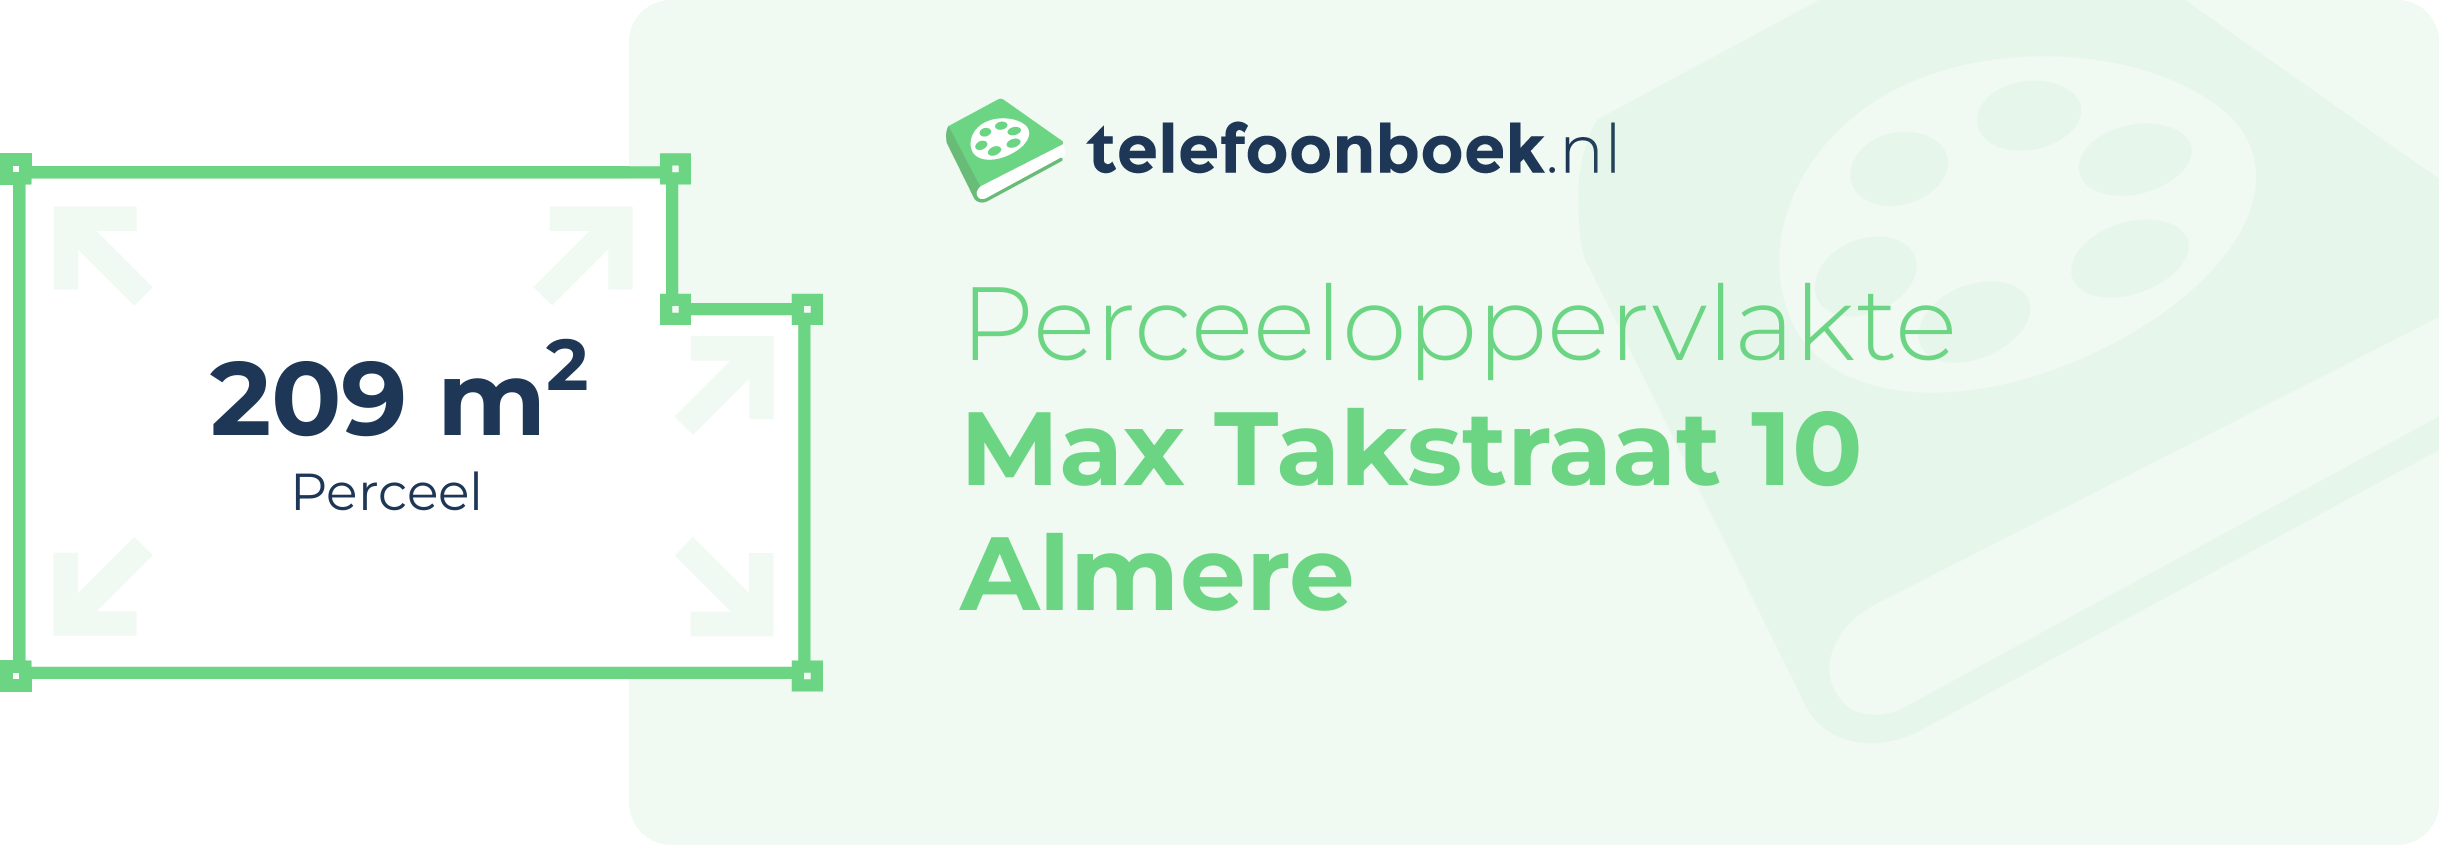 Perceeloppervlakte Max Takstraat 10 Almere